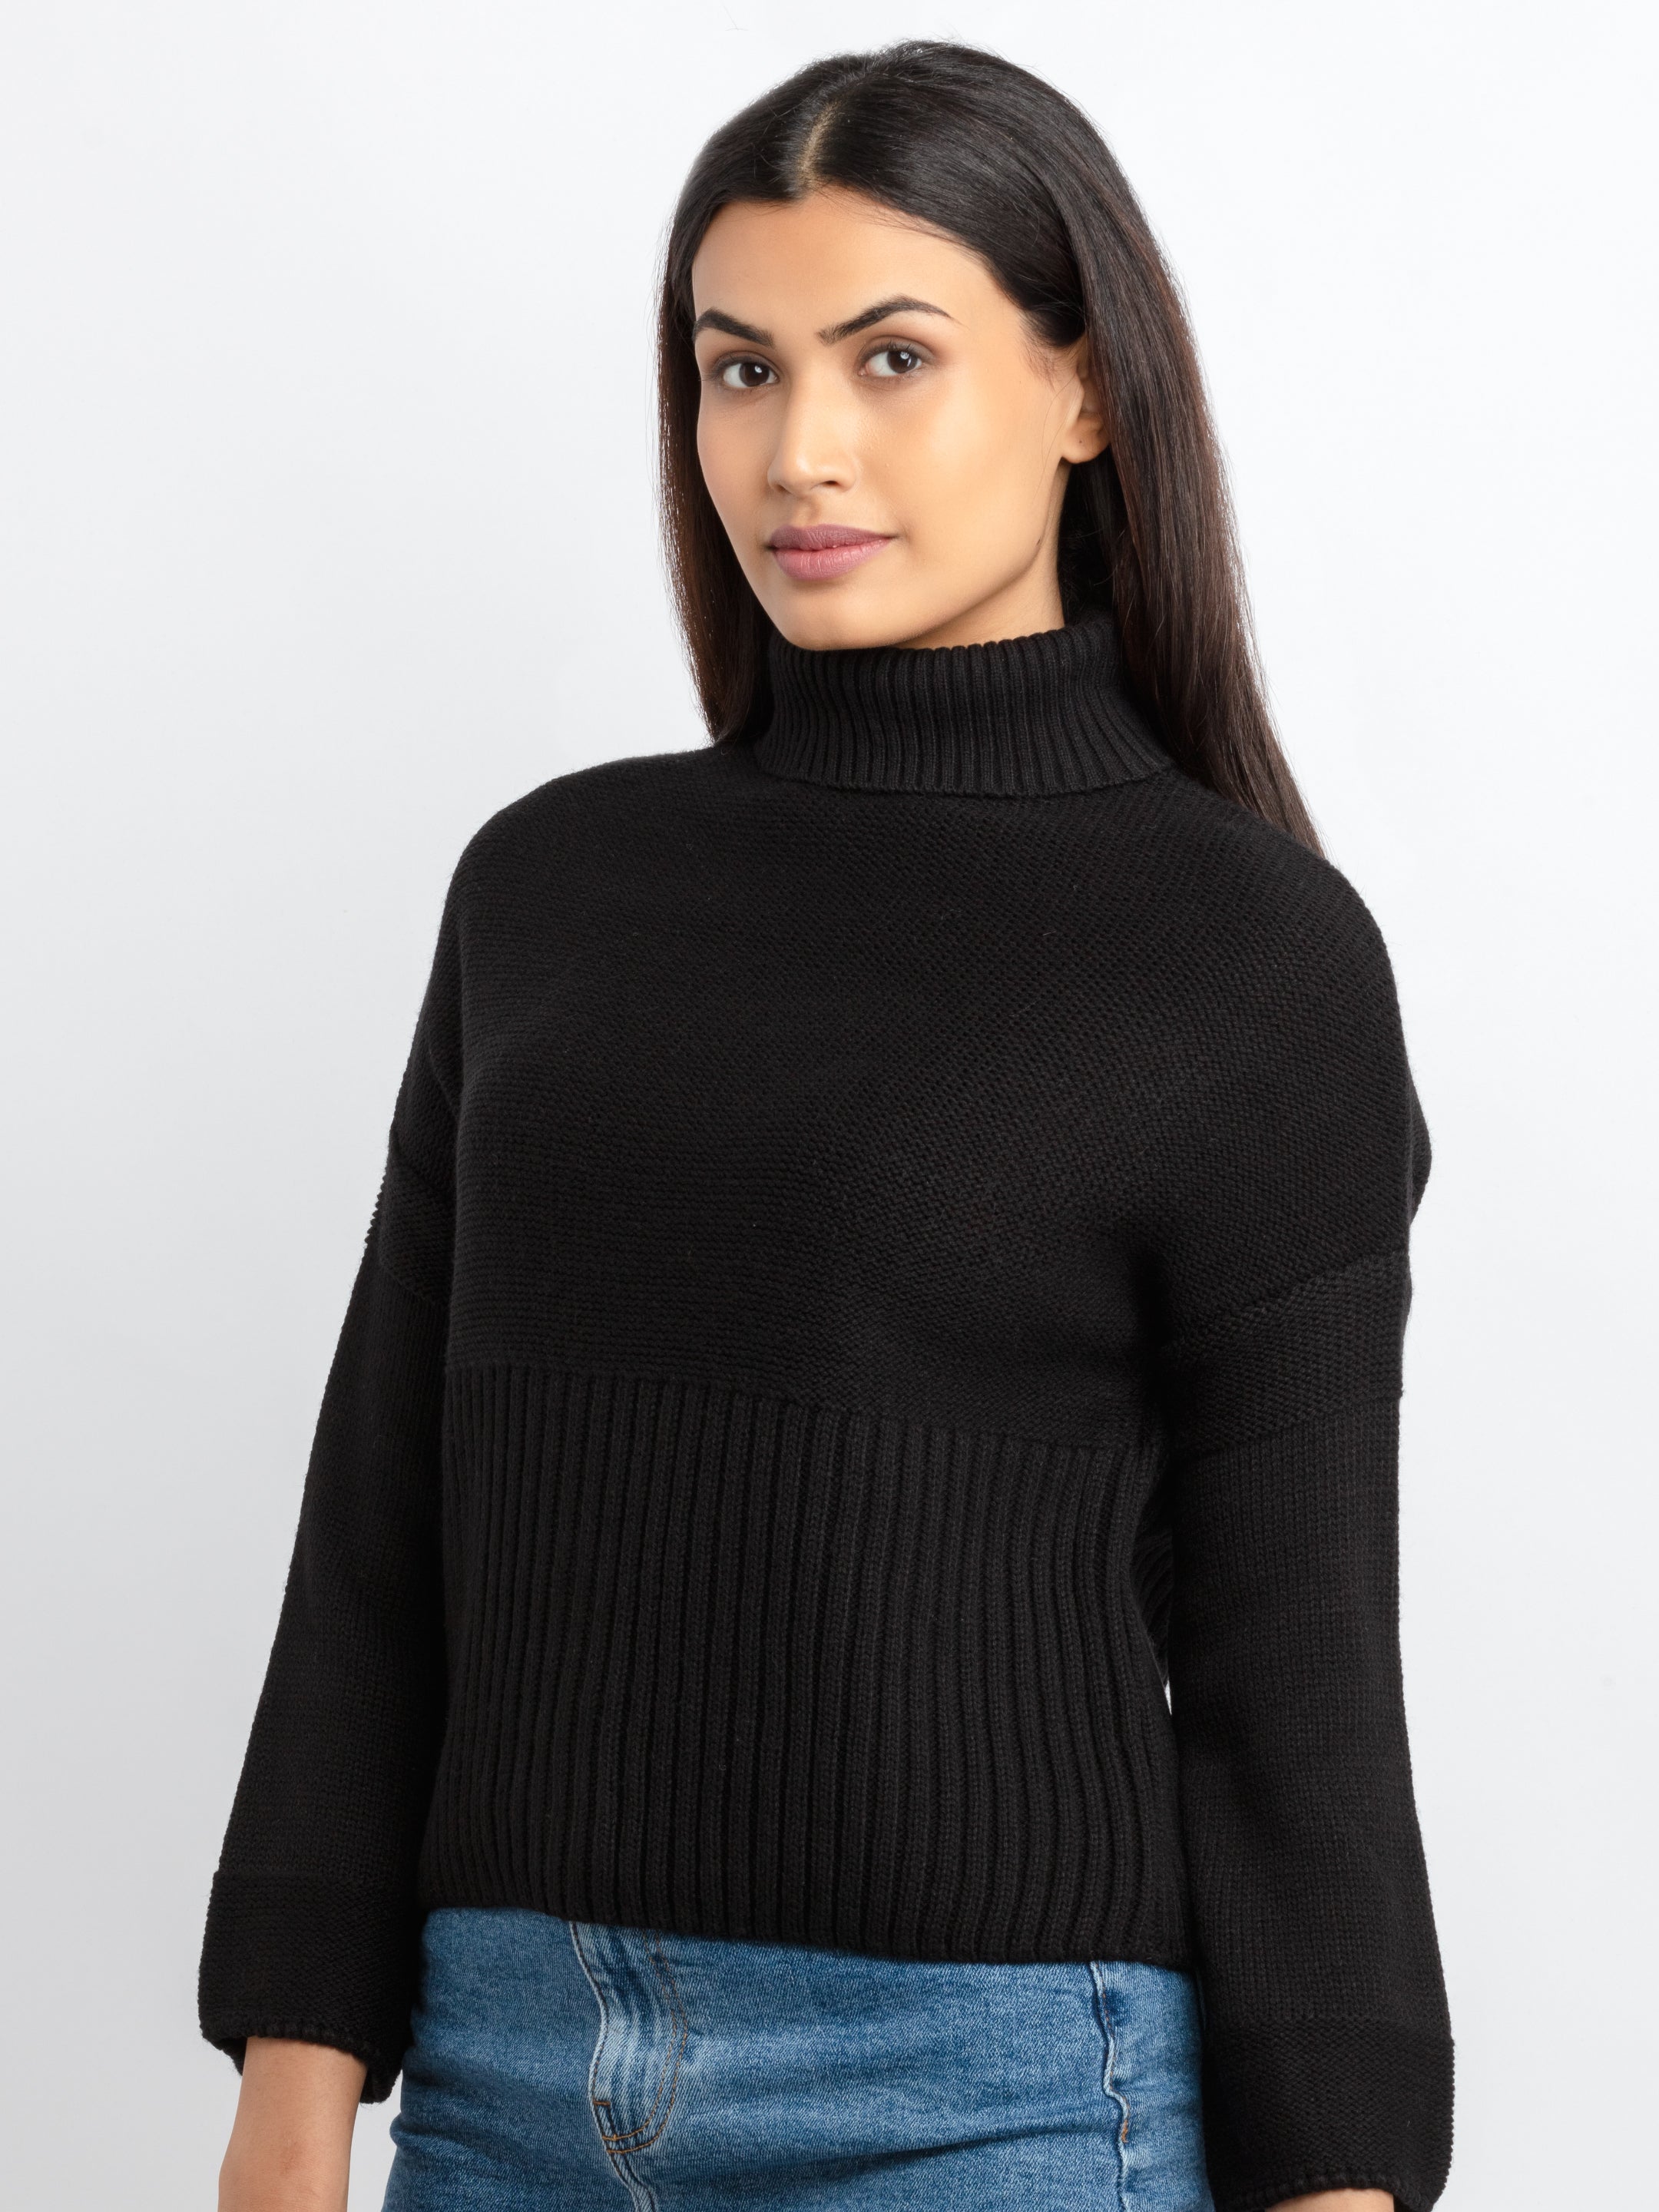 Buy Black Turtleneck Sweater for Women